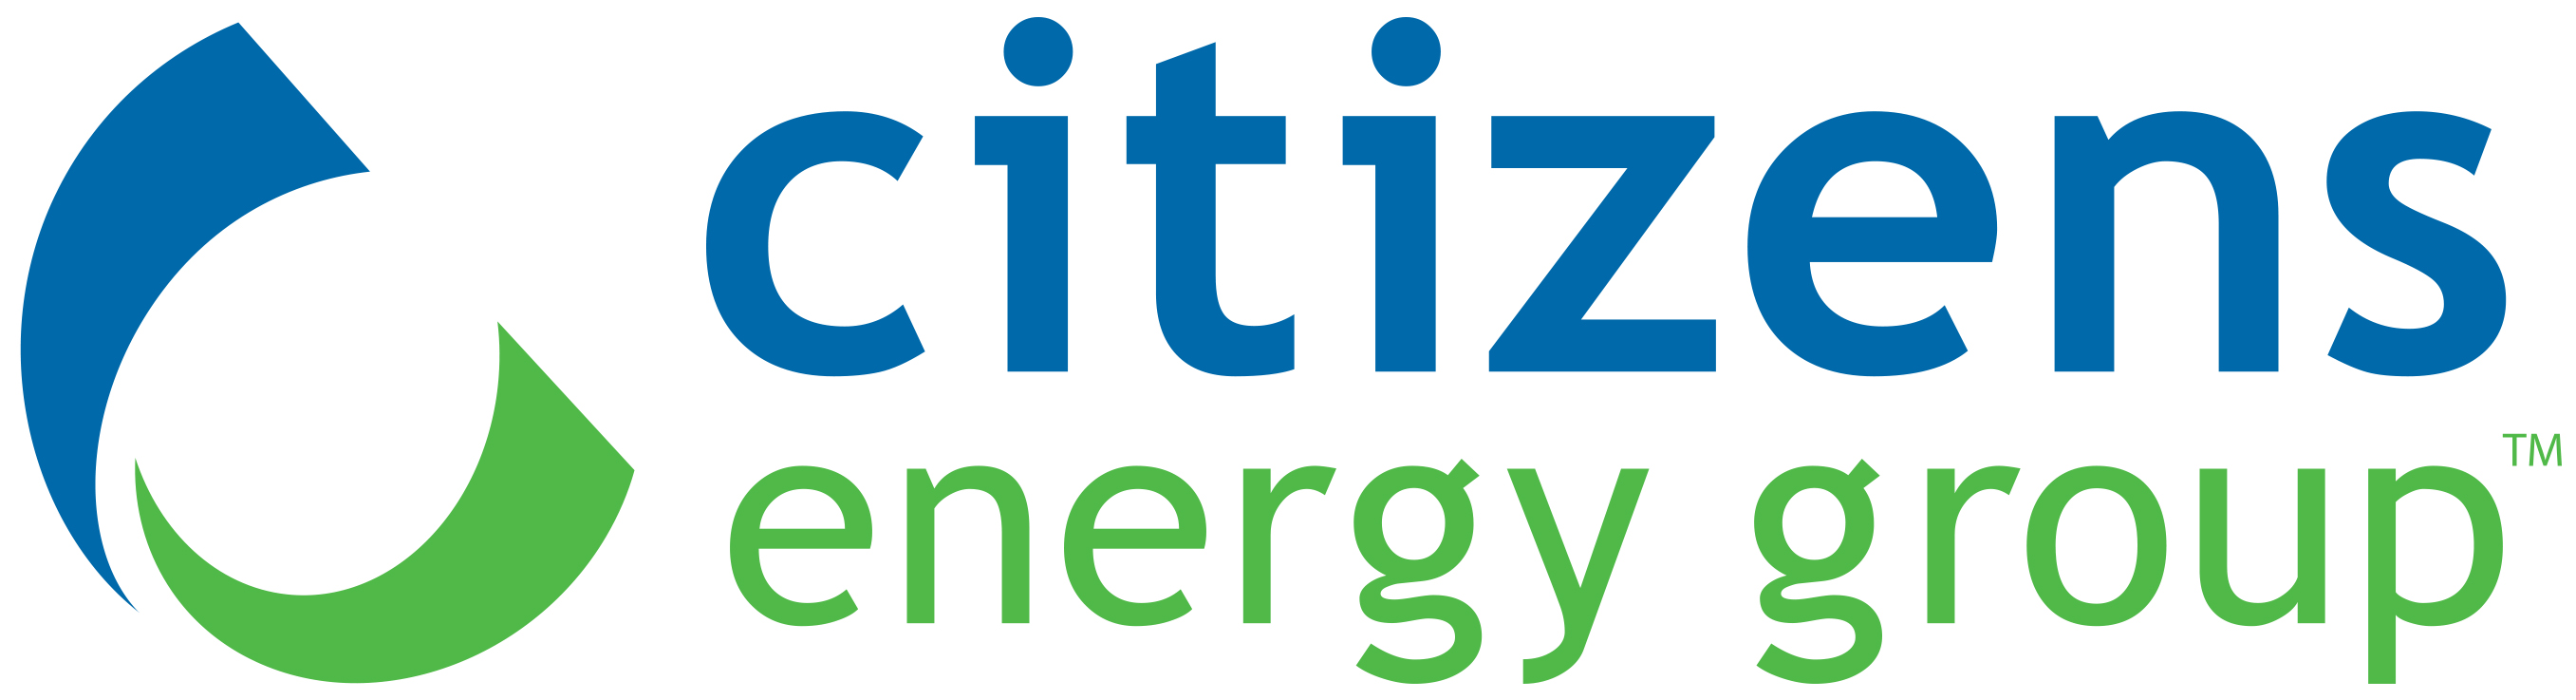 J. Citizens Energy Group (Mission)